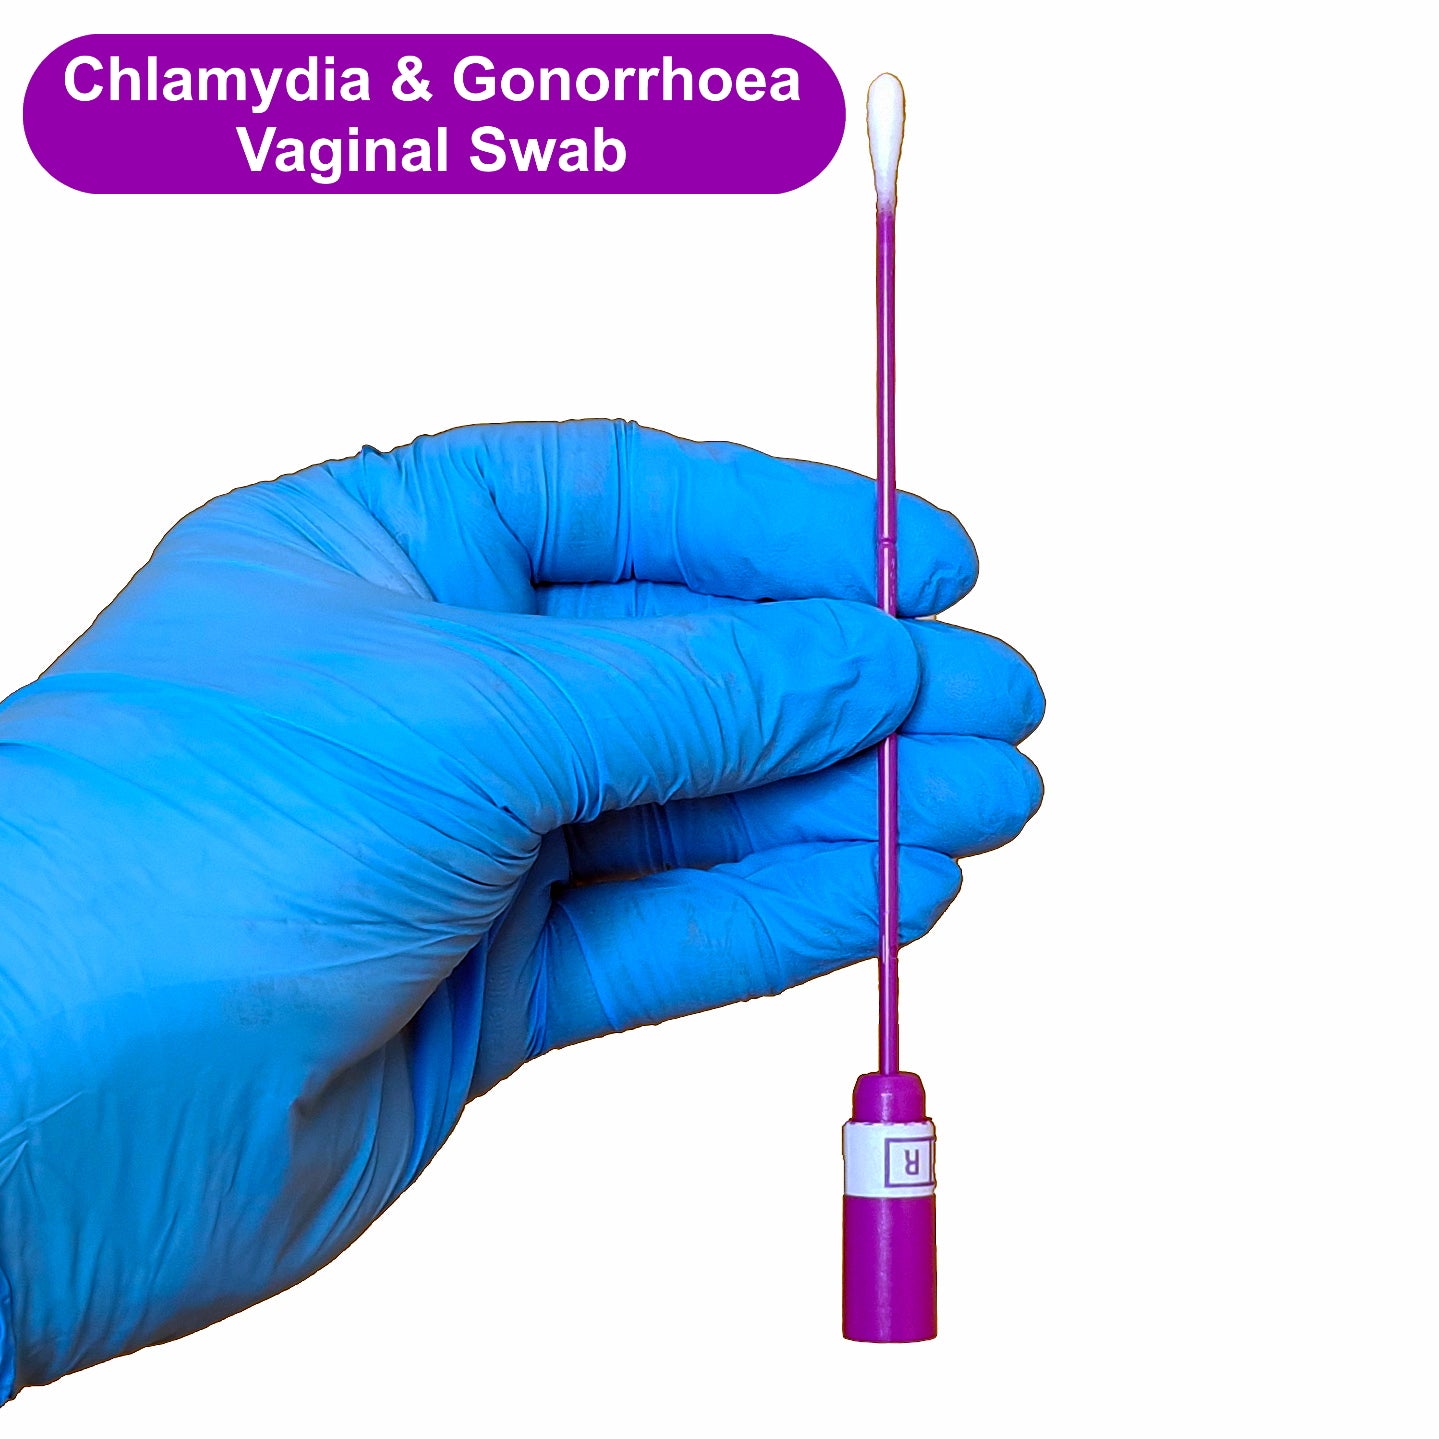 Chlamydia & Gonorrhoea Vaginal Swab